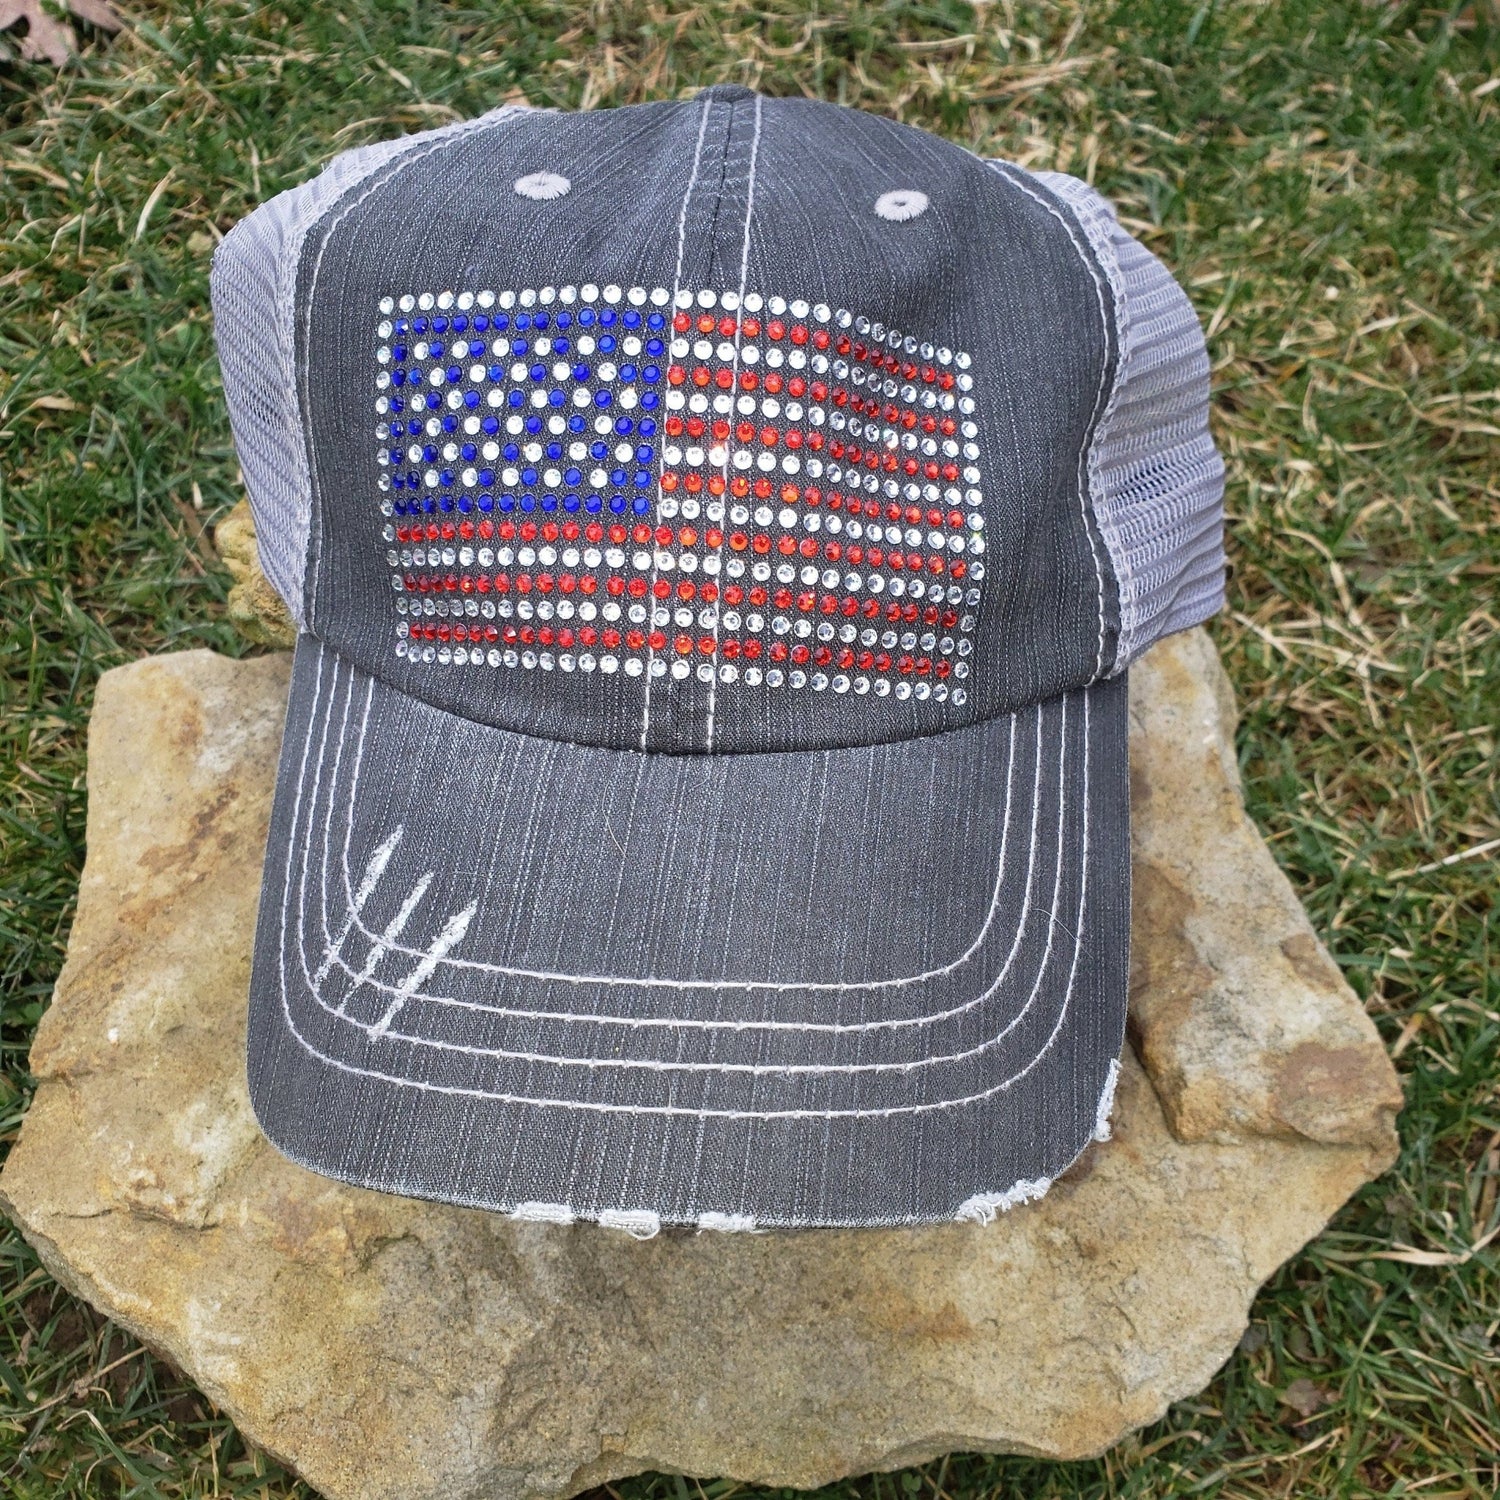 Distressed Denim Ball Cap with Bling Rhinestone American Flag, Patriotic Mesh Back Hat Rhinestone USA Flag, Trucker Hat, Gift for July 4th - SBS T Shop